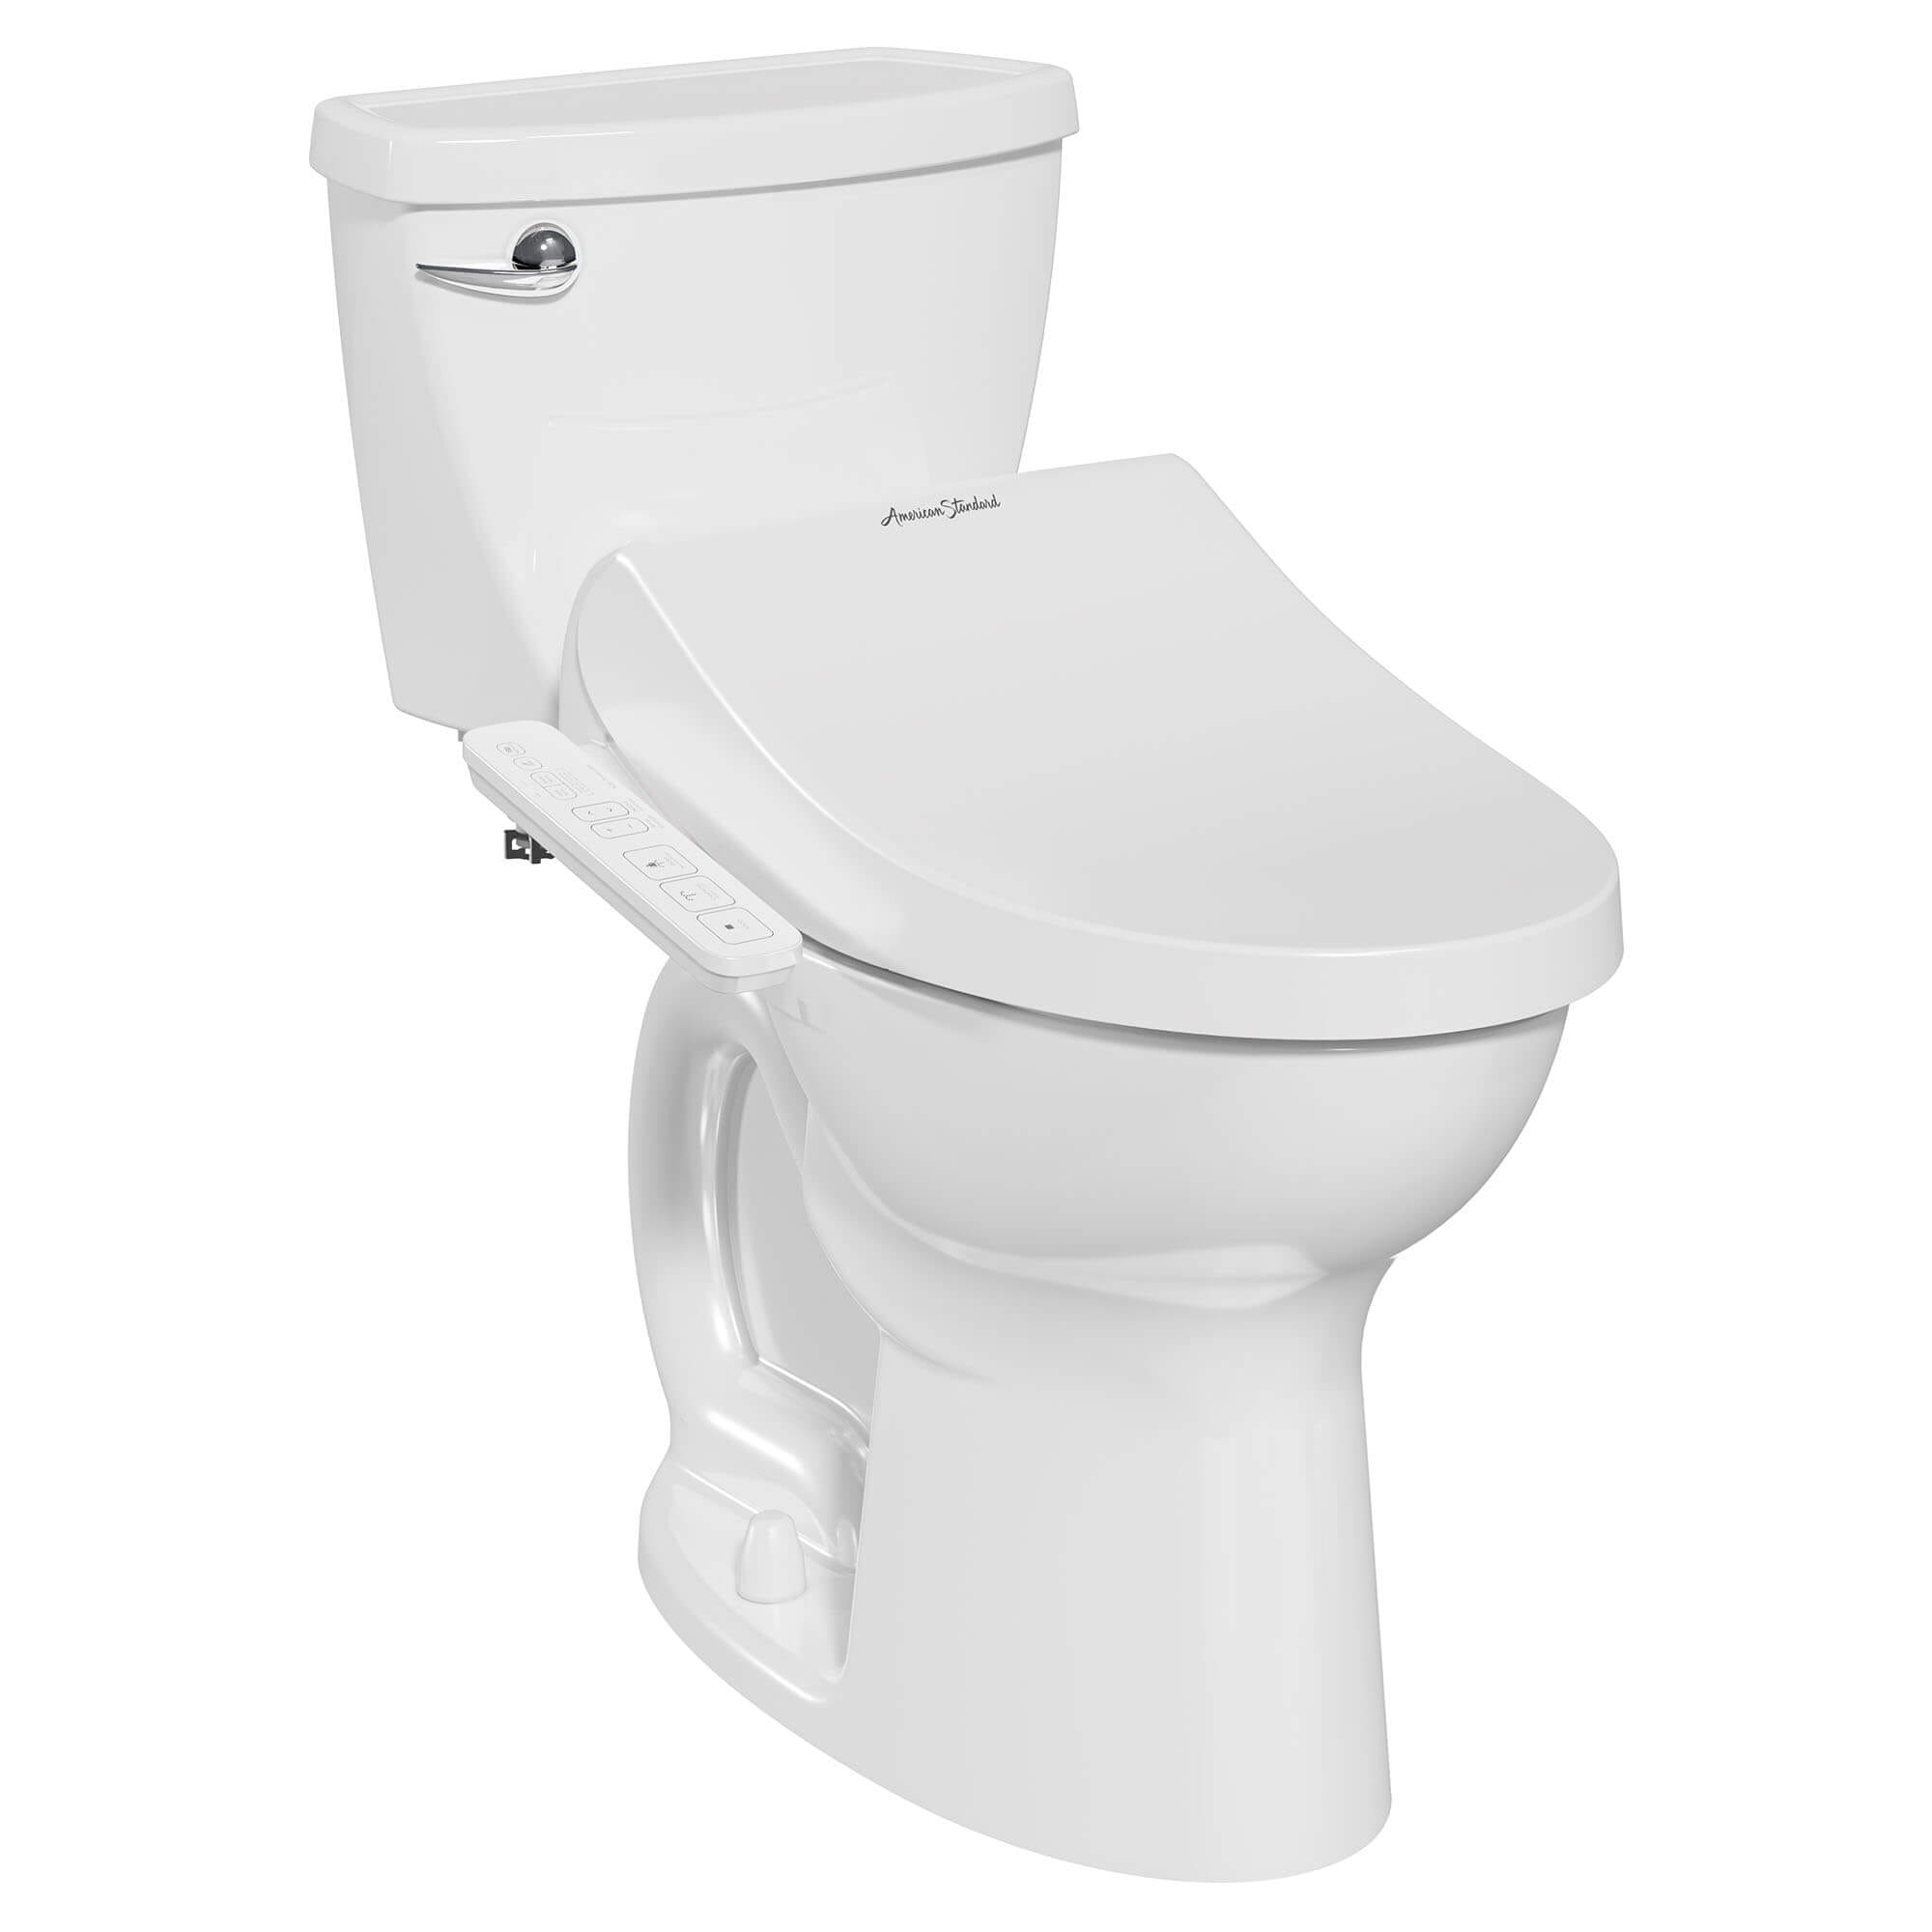 SpaLet Bidet toilet seat